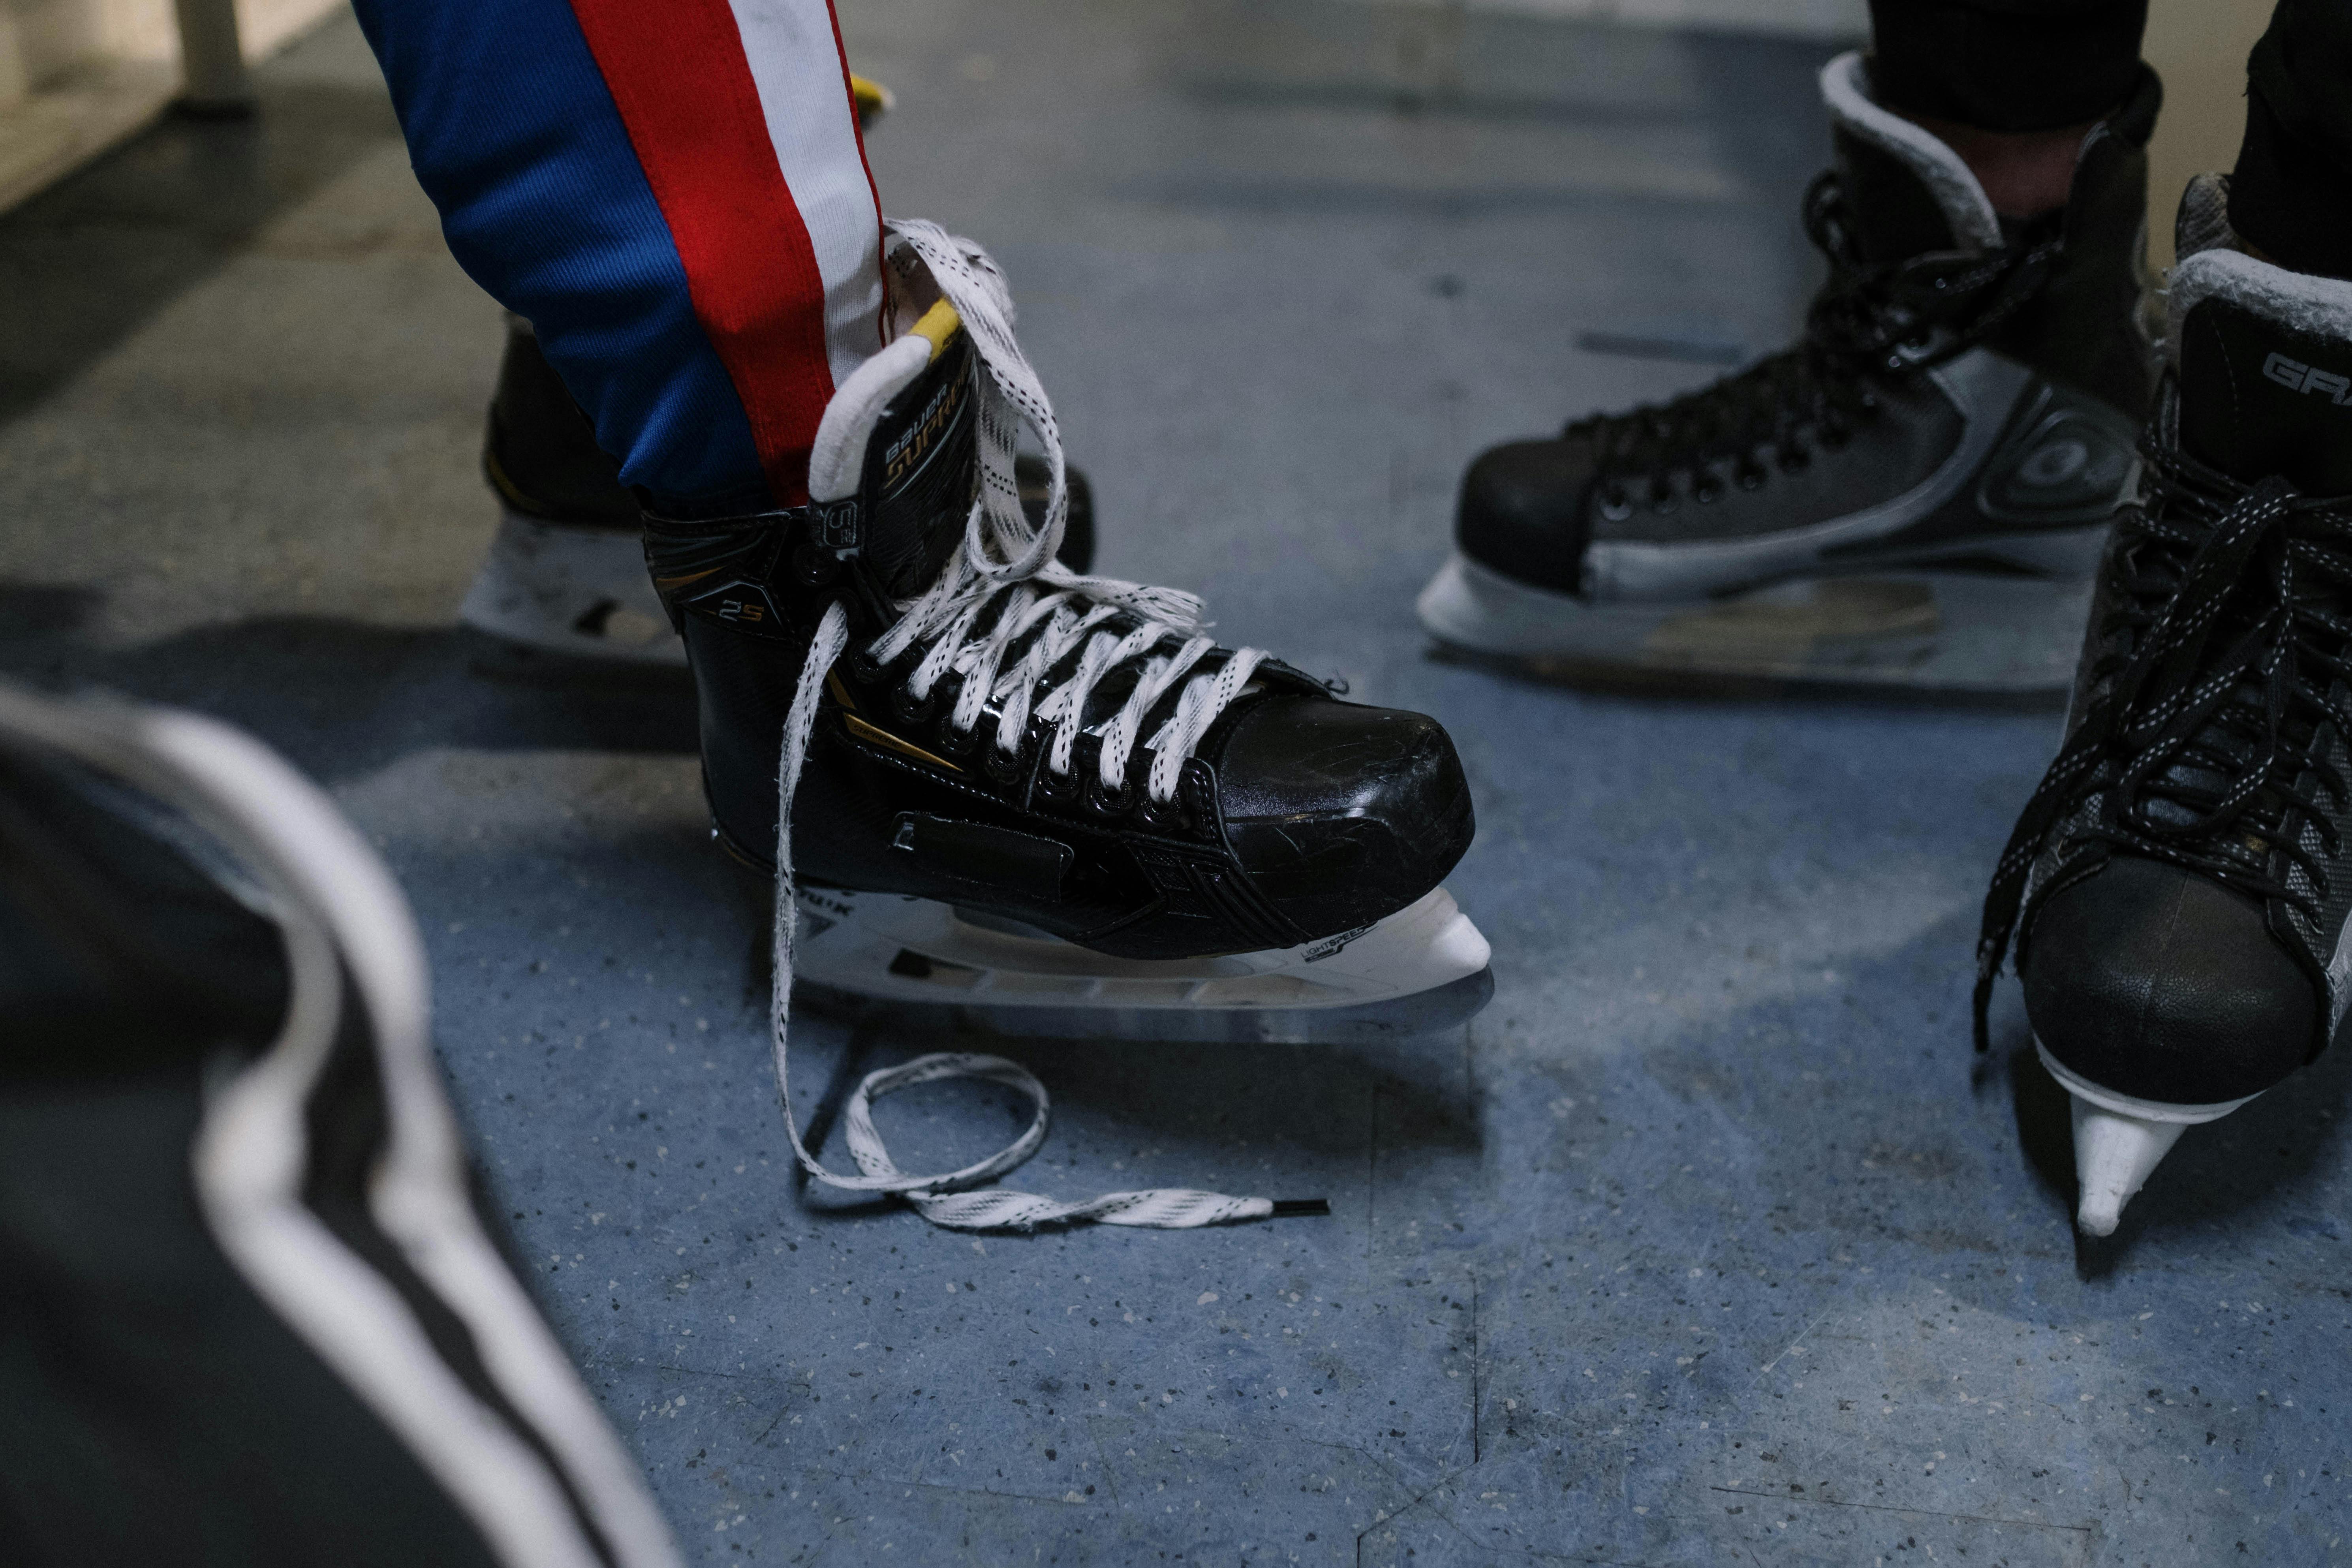 Hockey skate